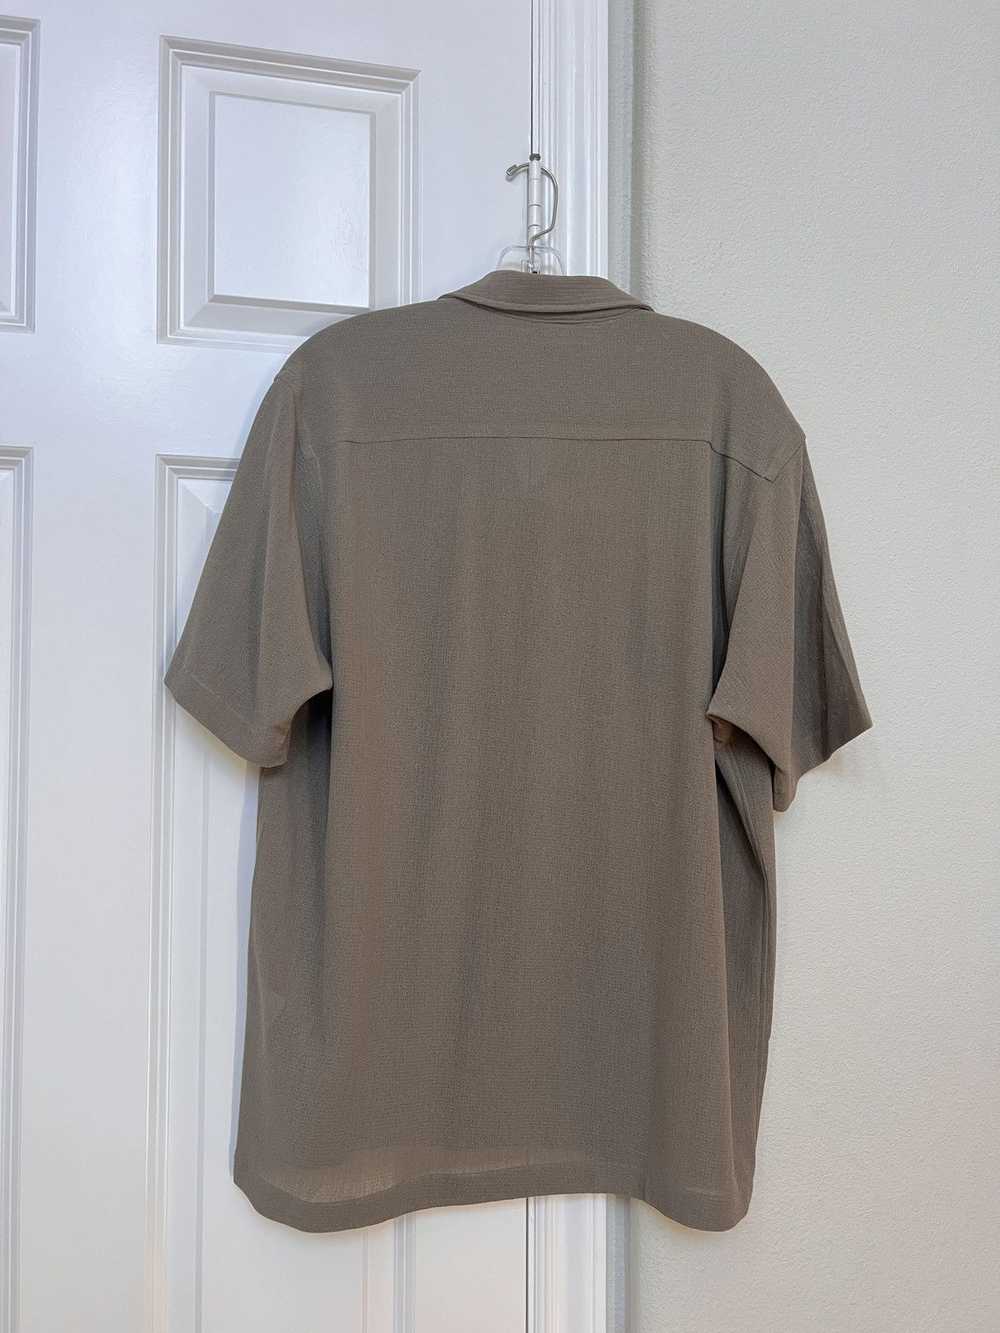 Cmmn Swdn Dexter shirt size 52 - image 2